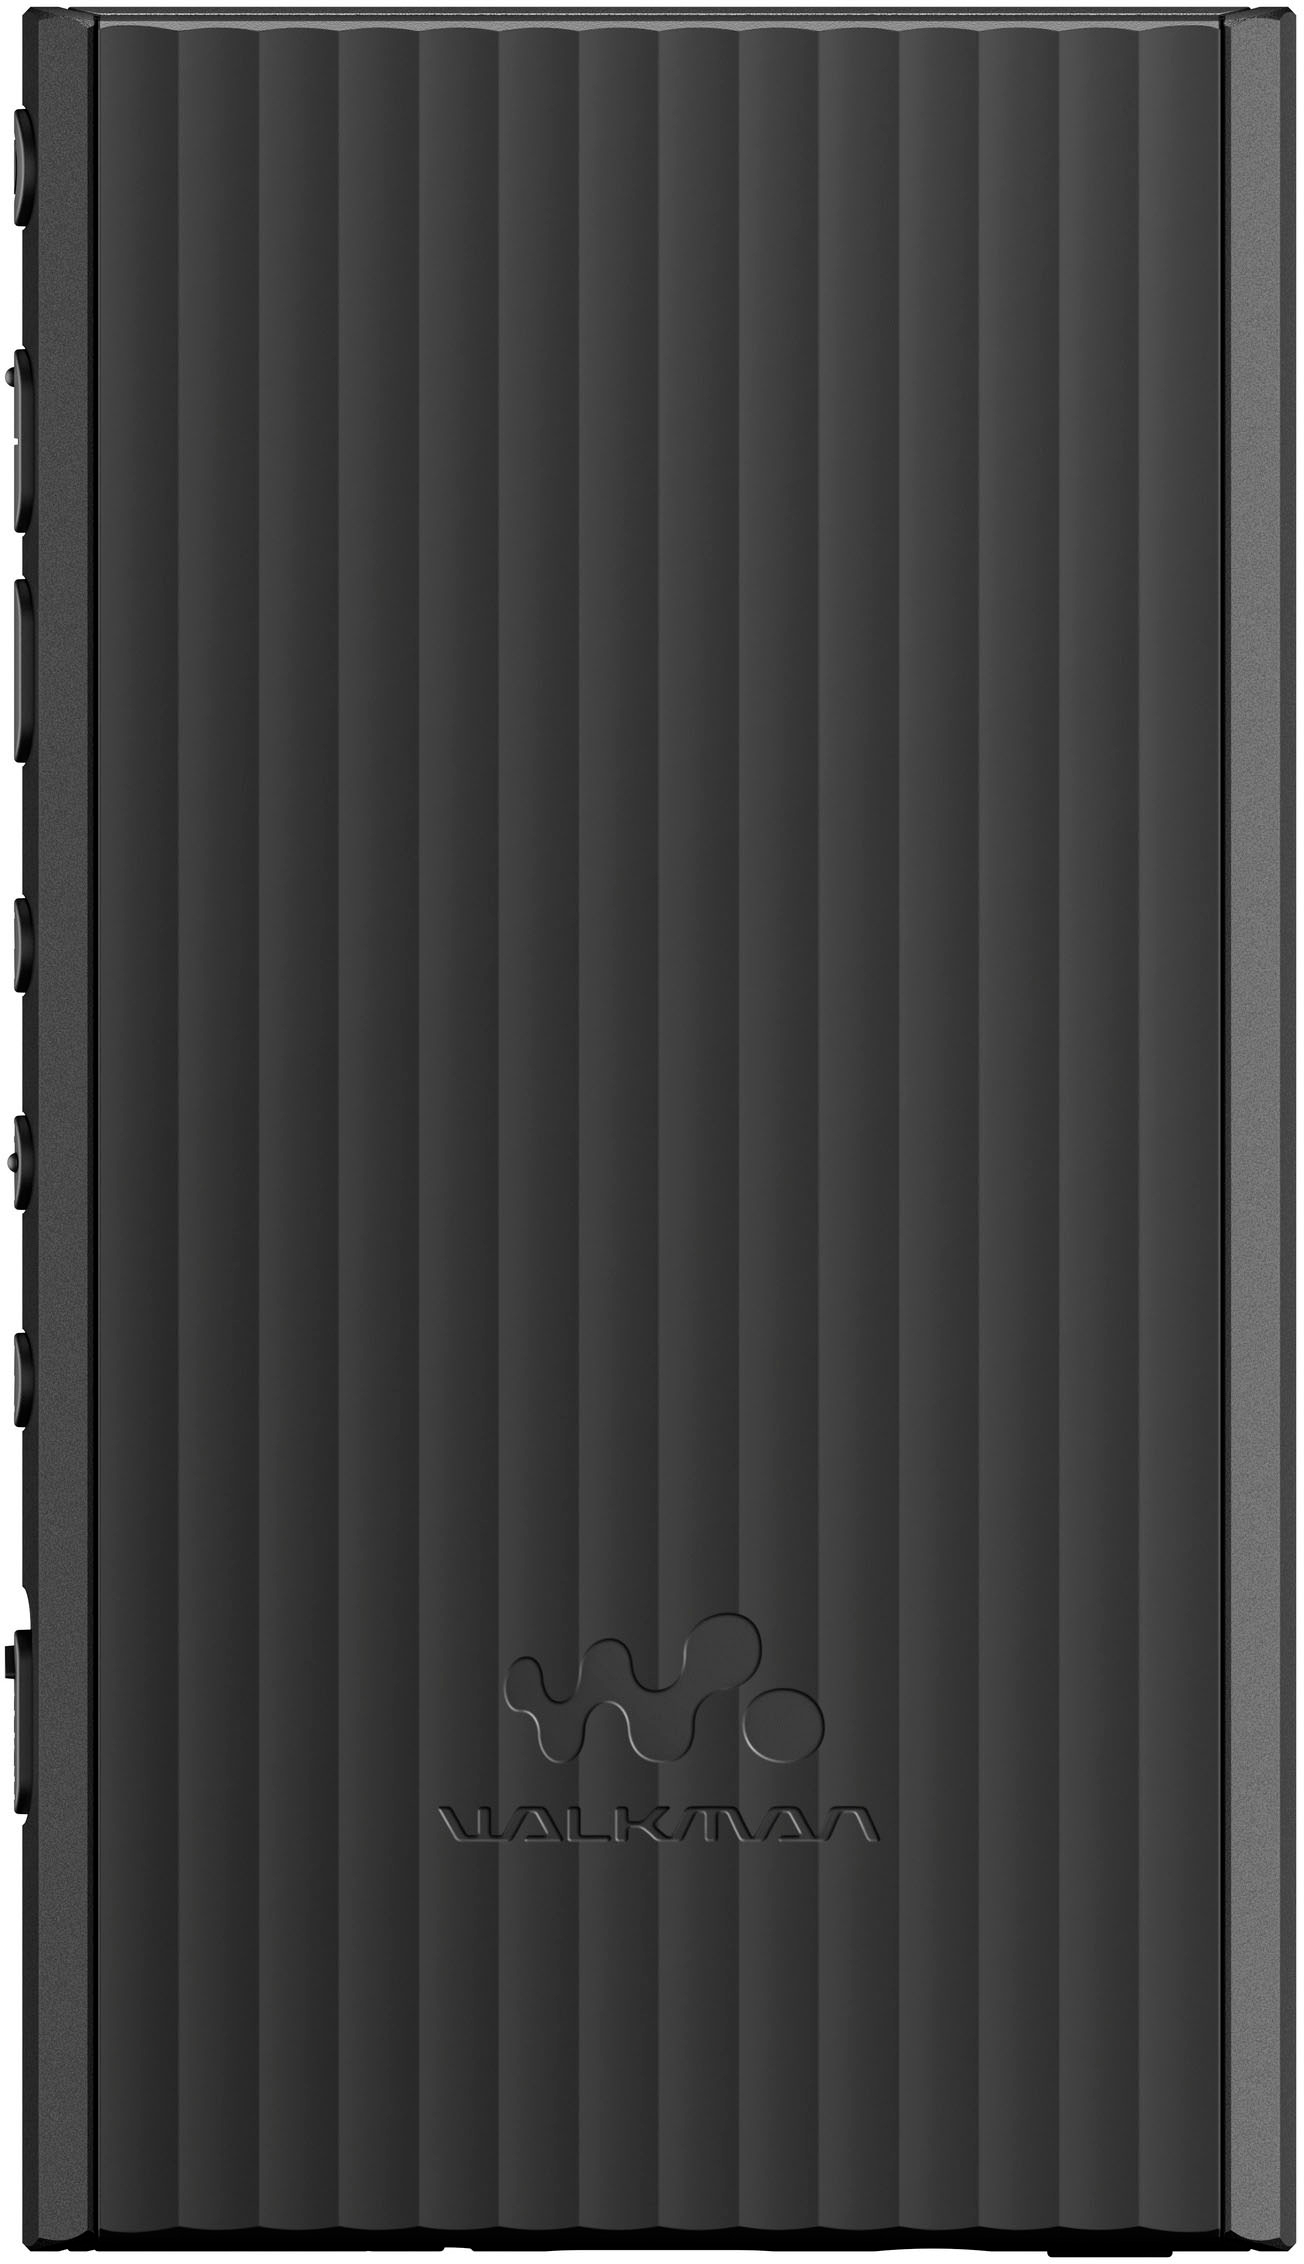 Back View: Sony NW-A306 Walkman A Series - Black